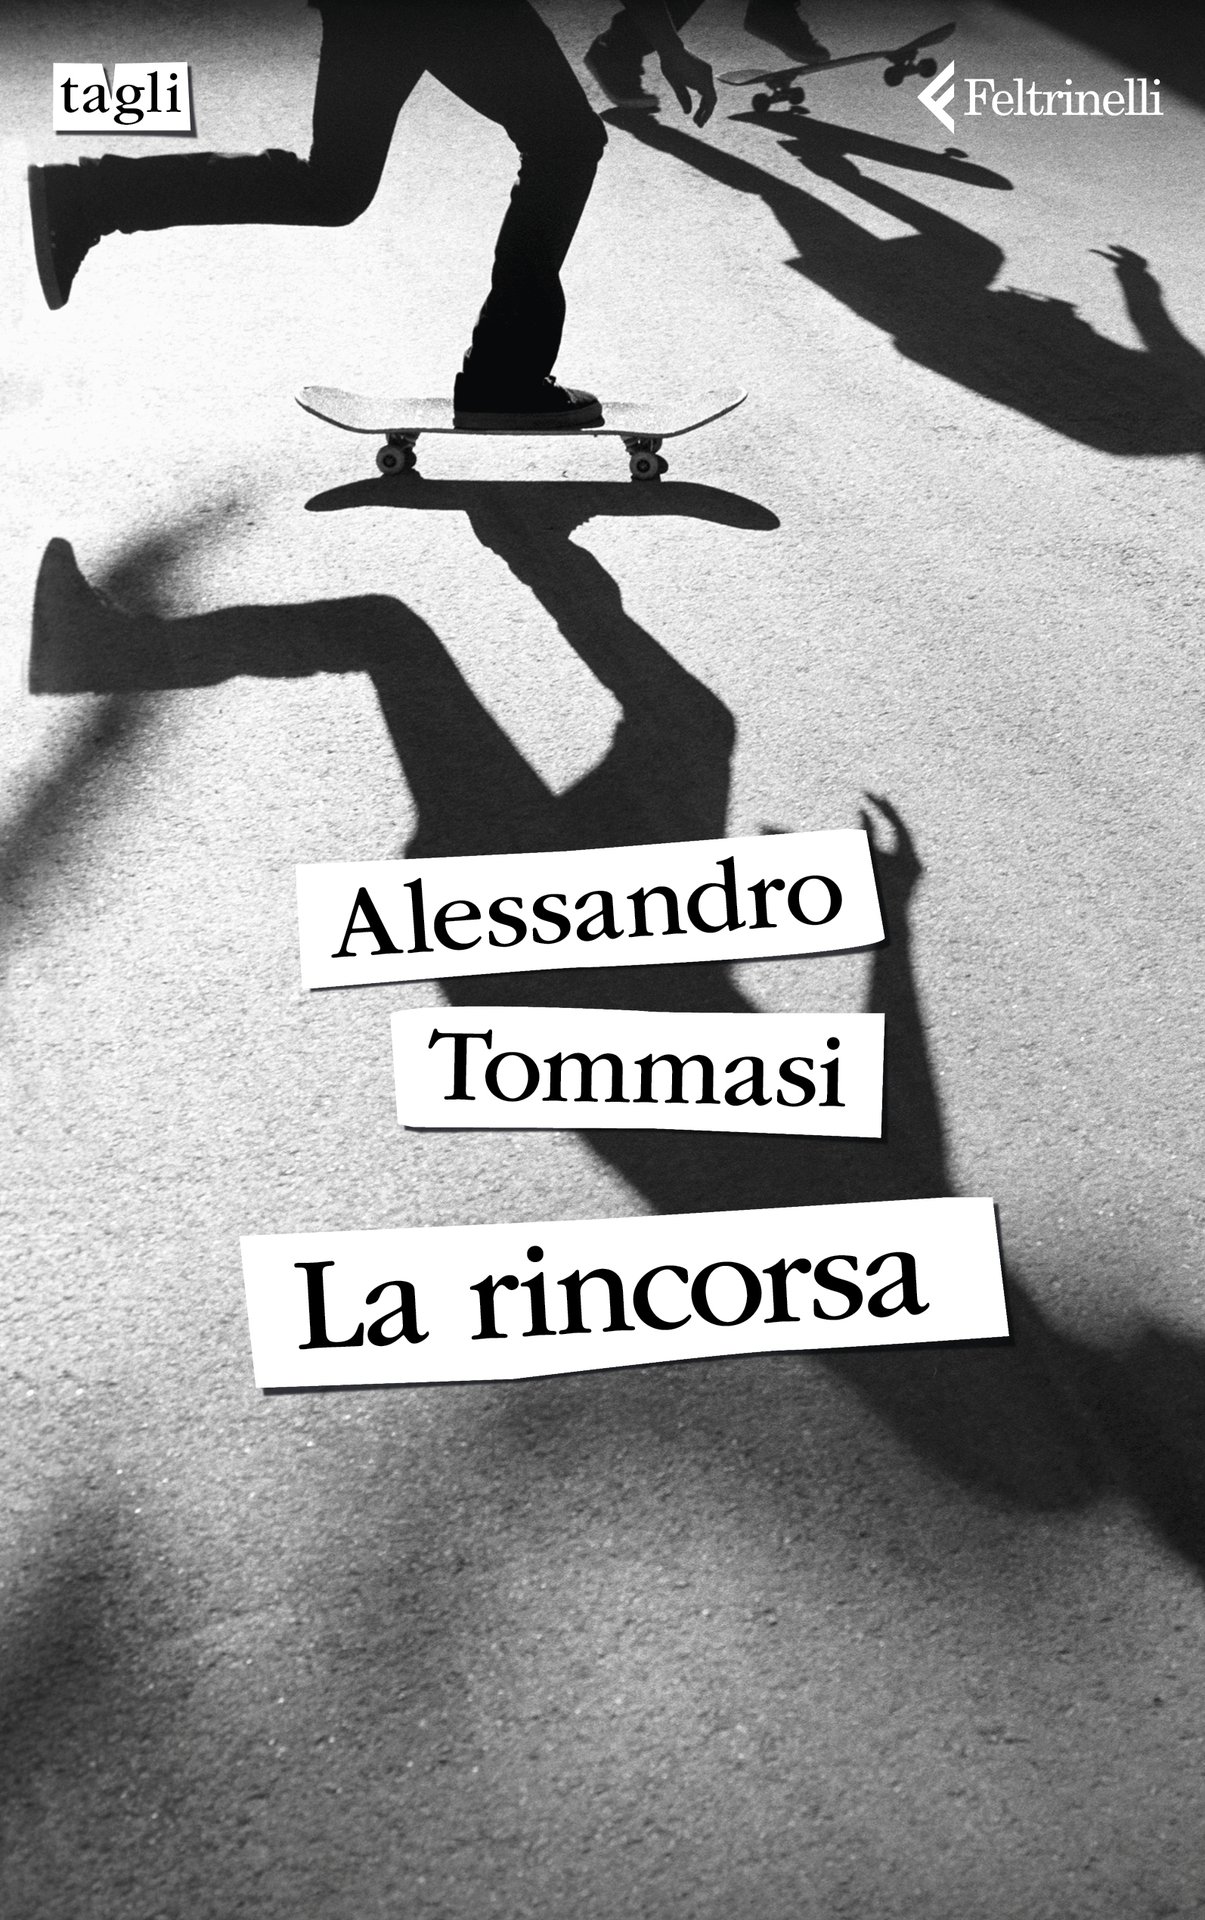 ALESSANDRO TOMMASI